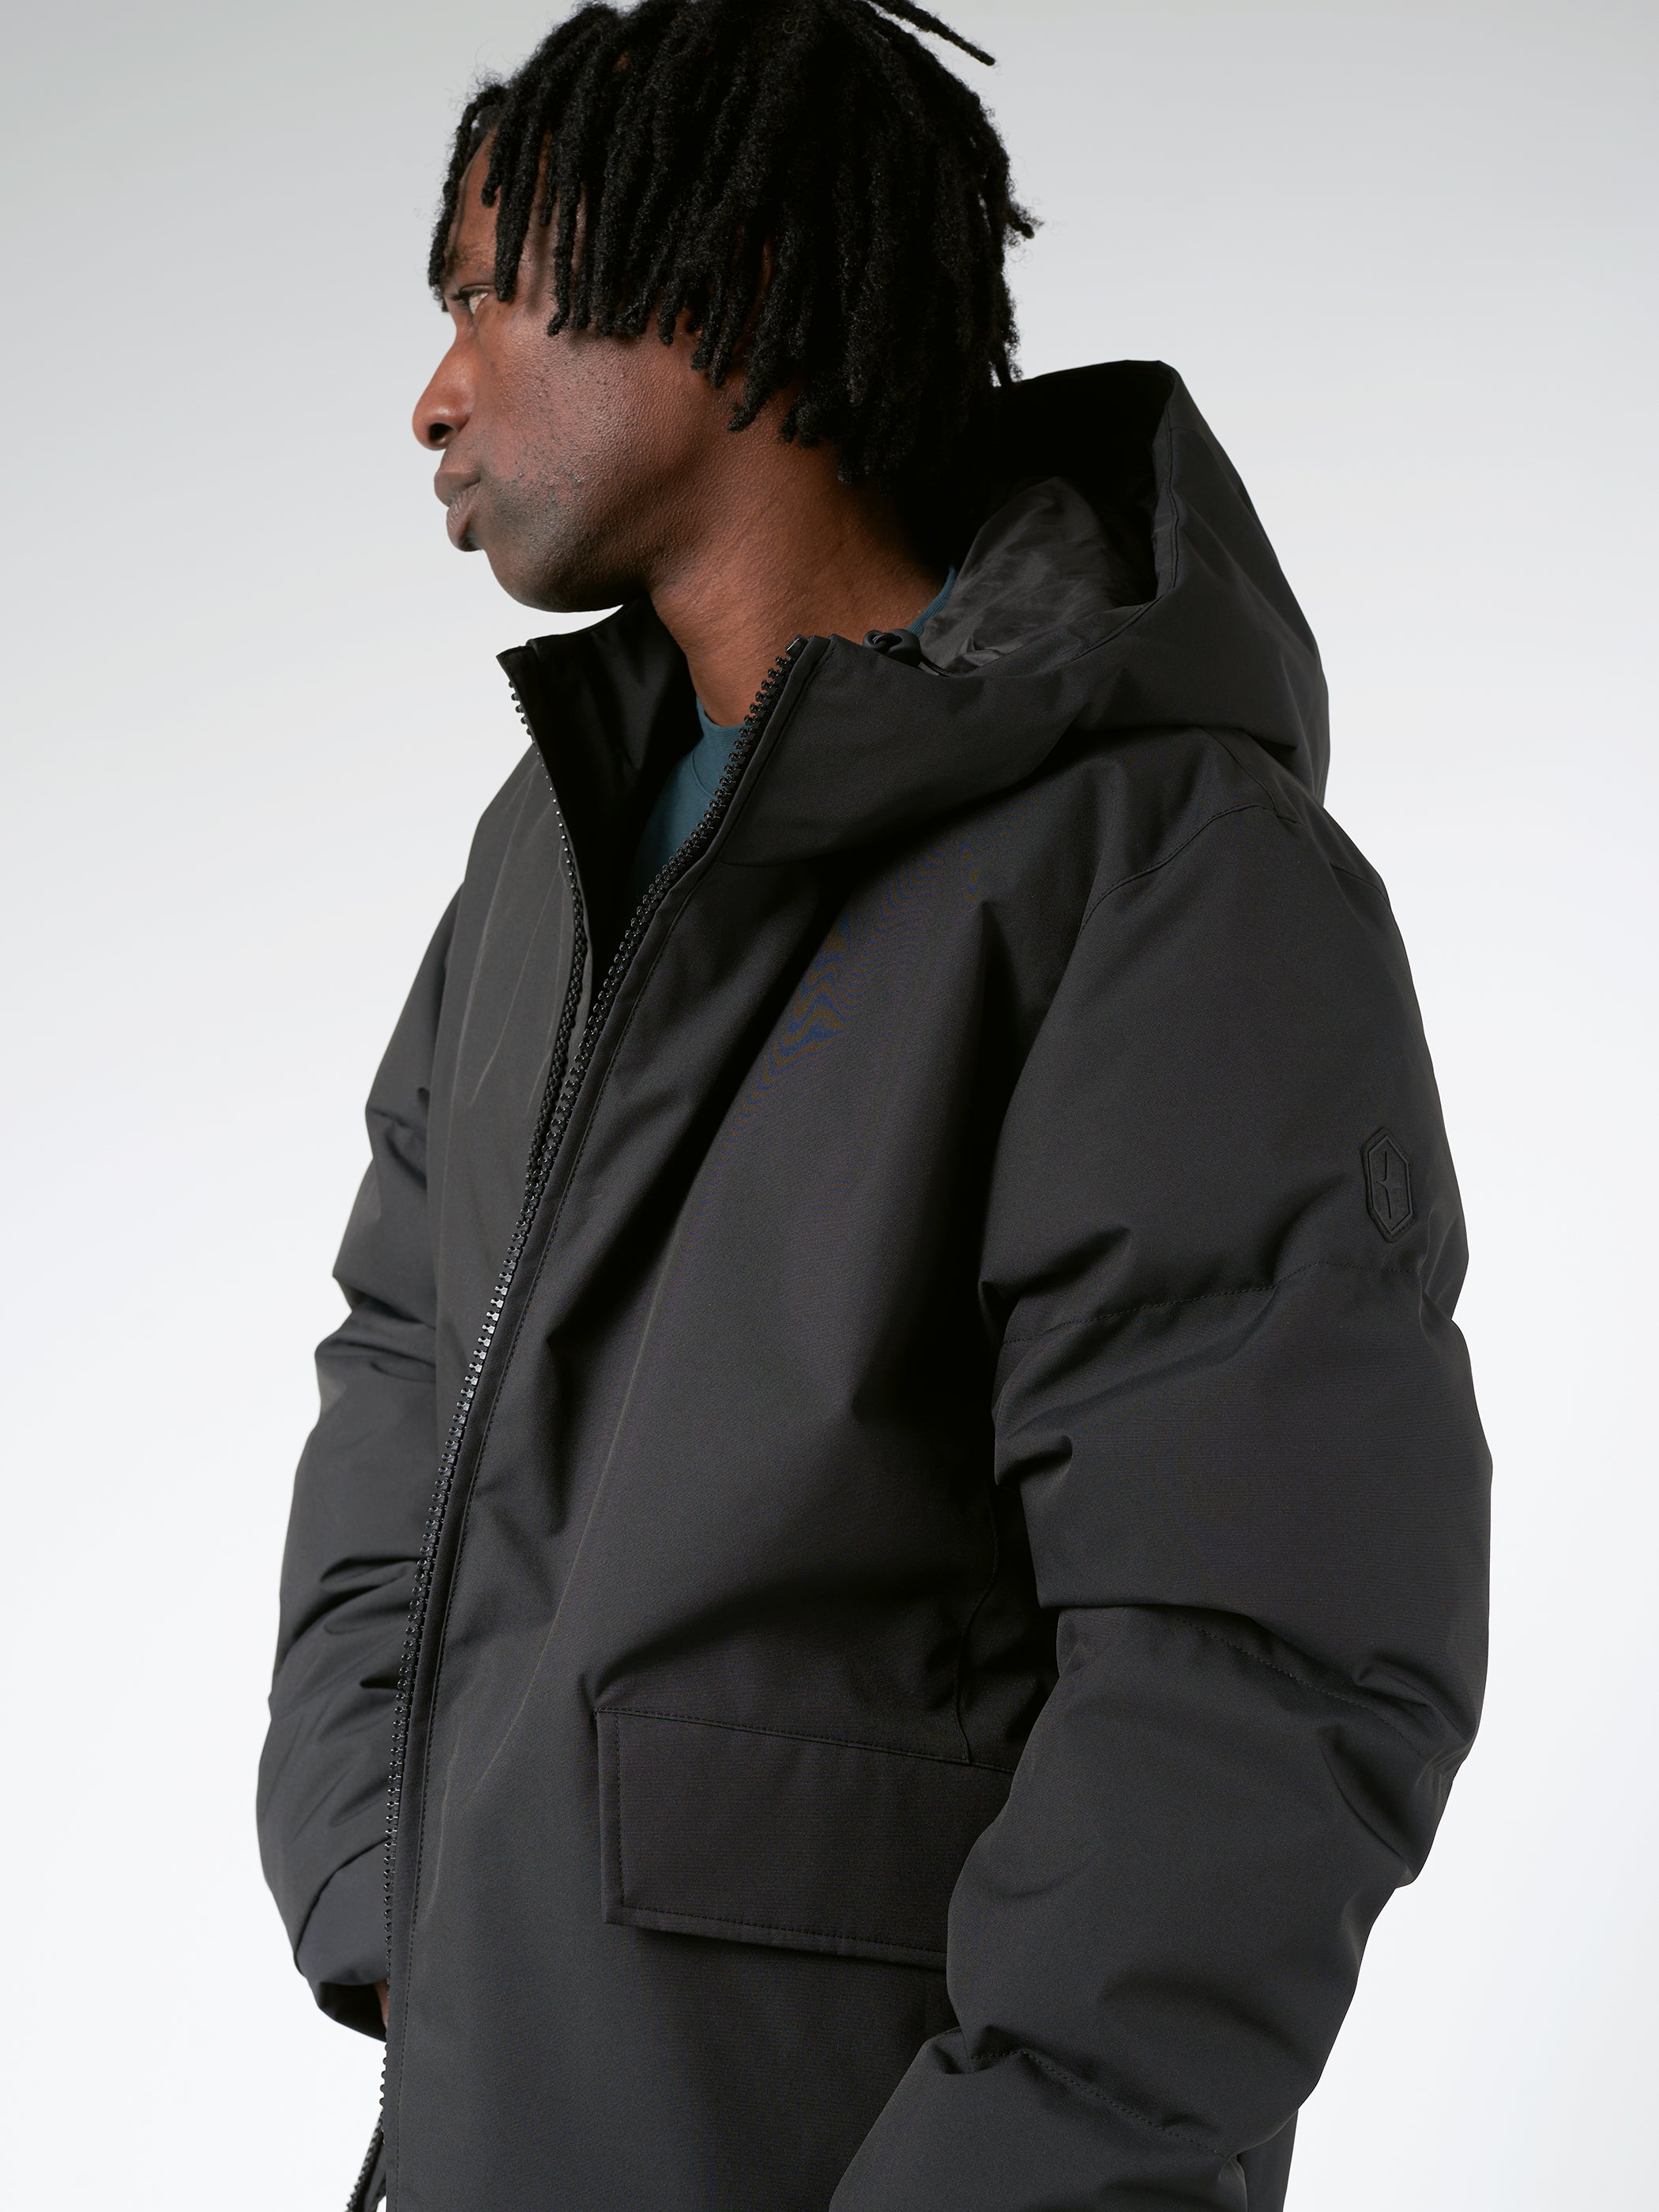 Quartz Co. - Lennox 2.0 Hooded Down Winter Jacket in Black 